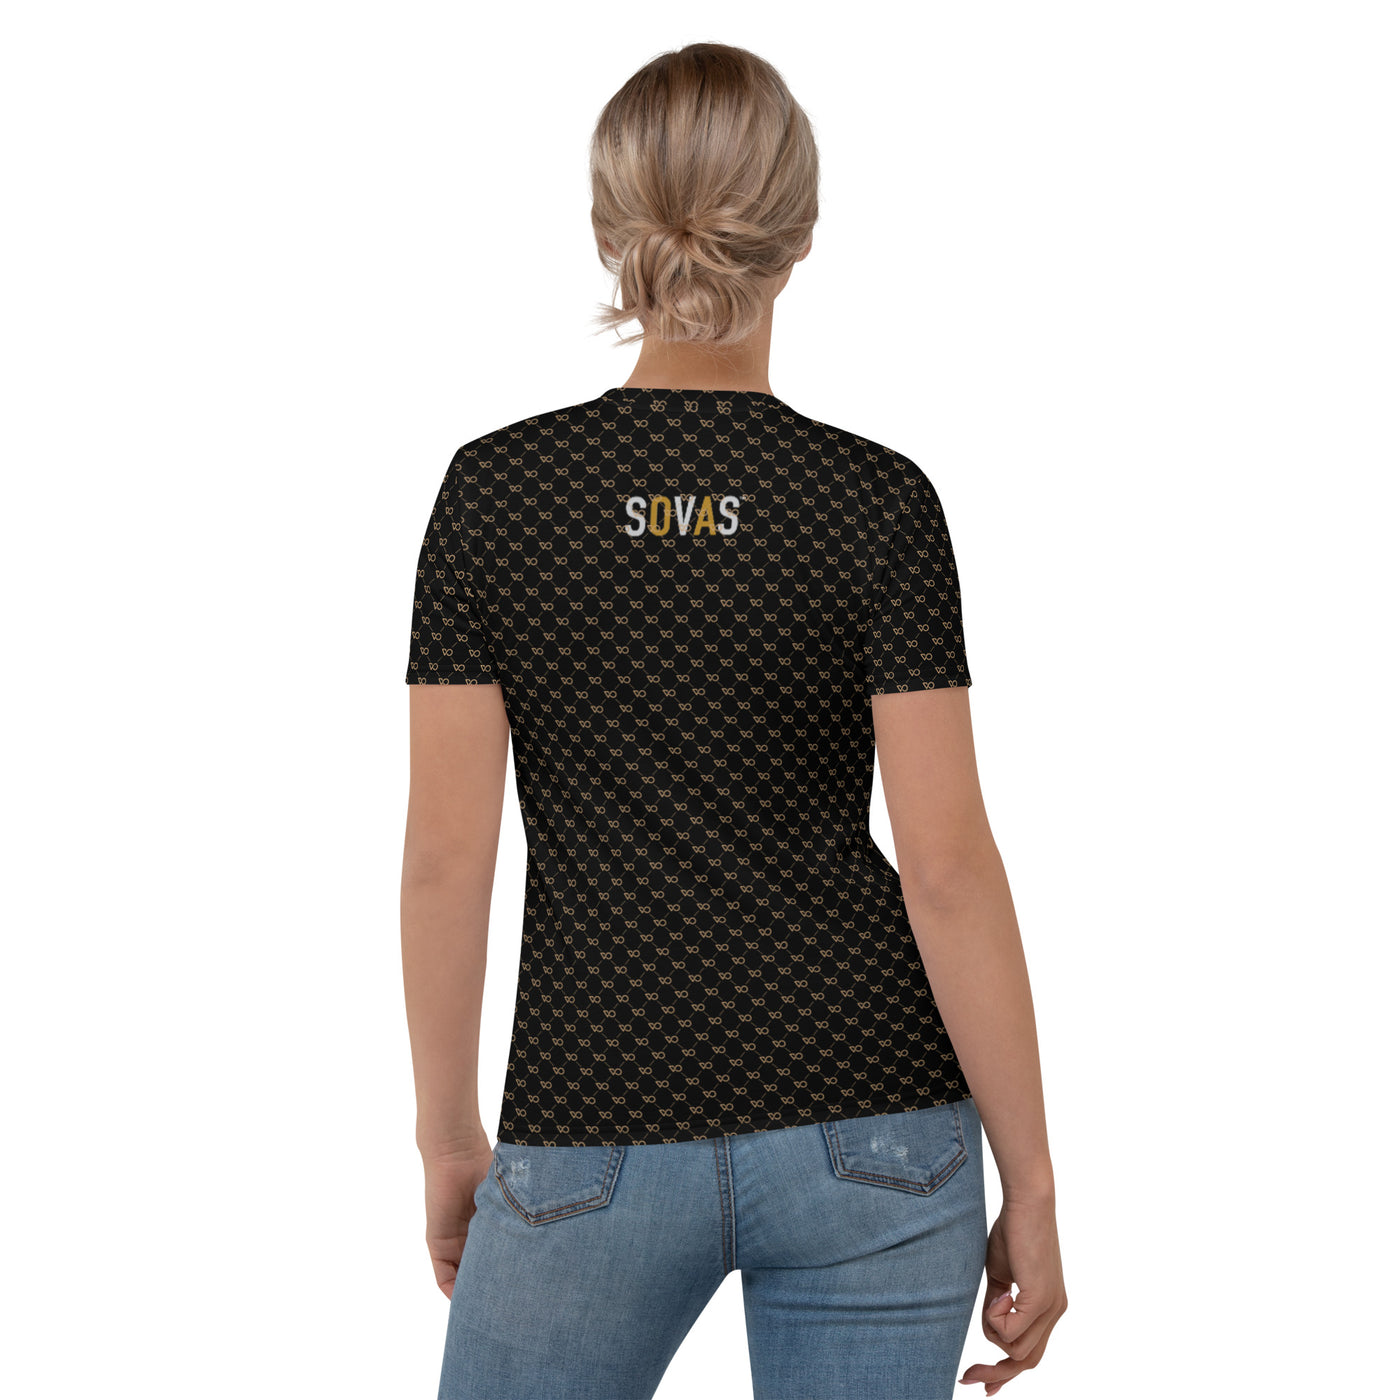 NOMINEE Seal Women's T-shirt black